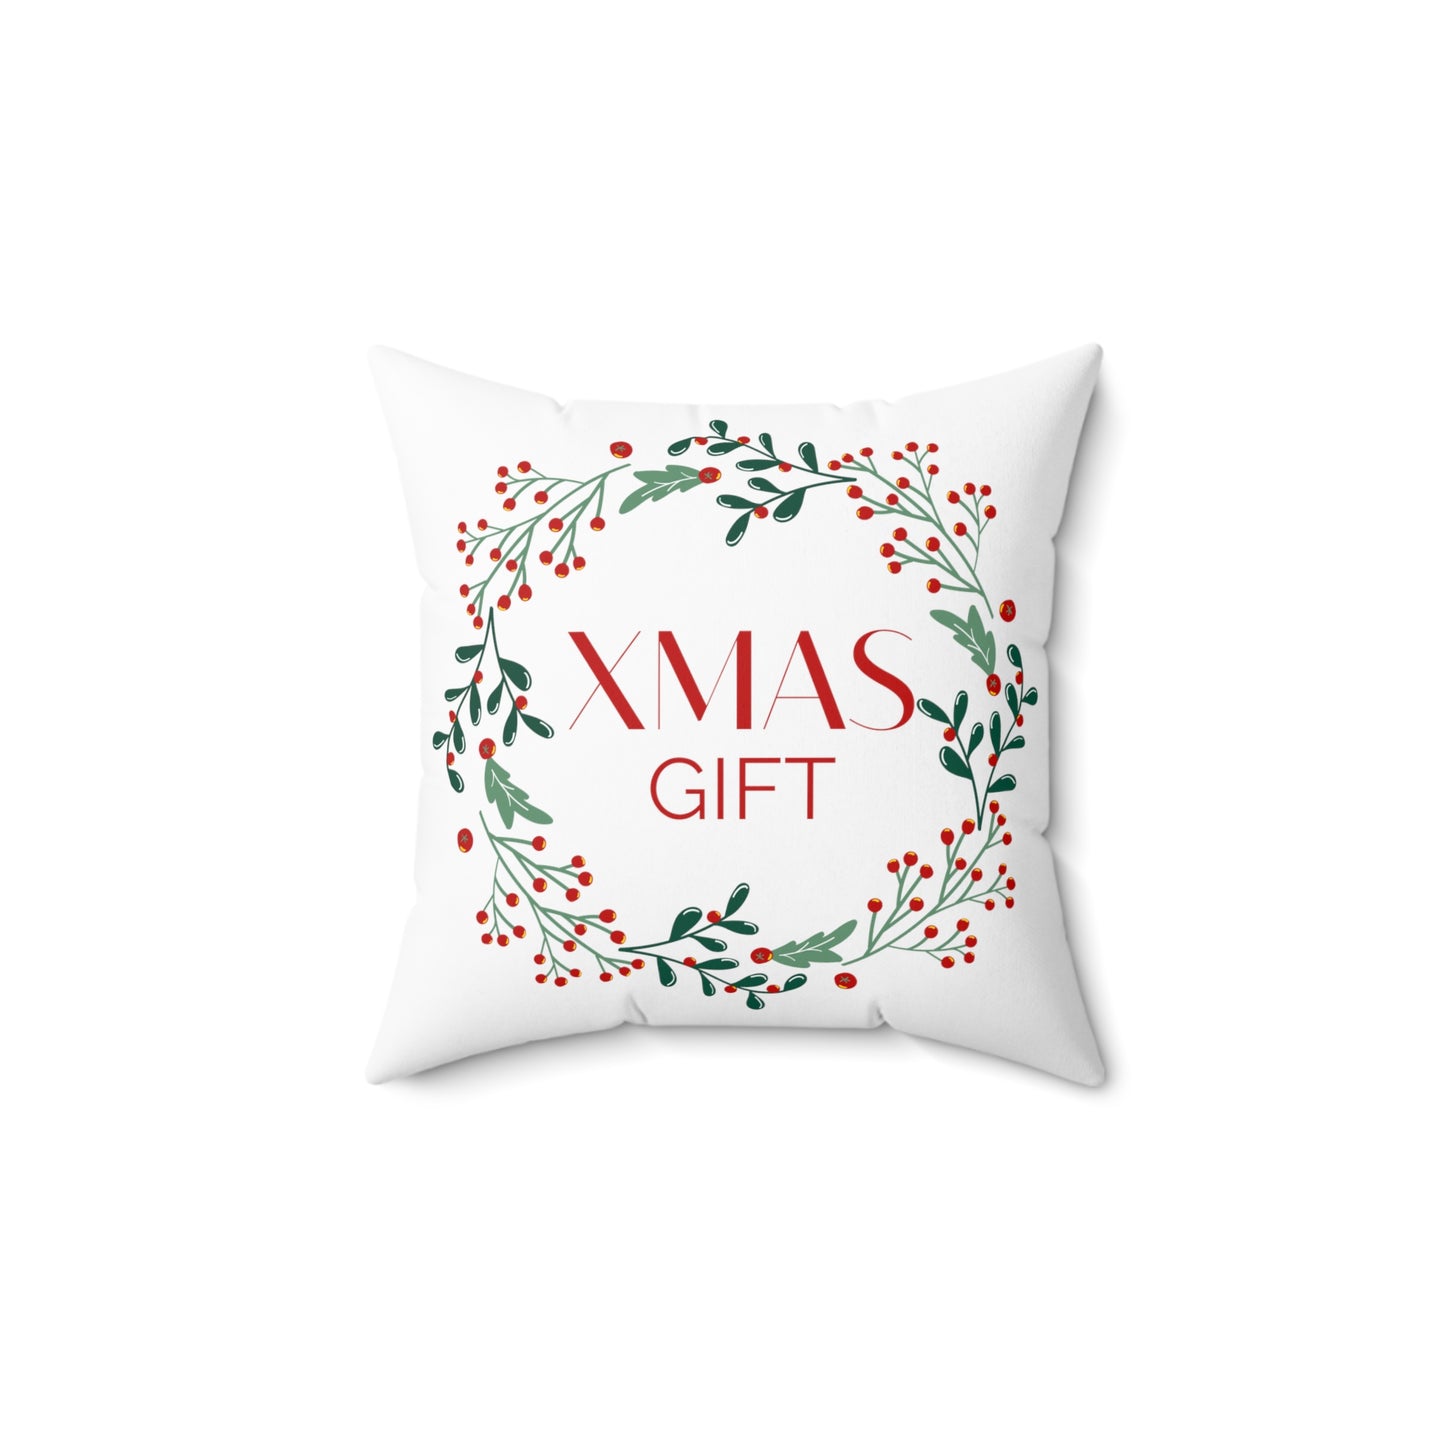 Xmas Gift Printed Polyester Square Pillow, White